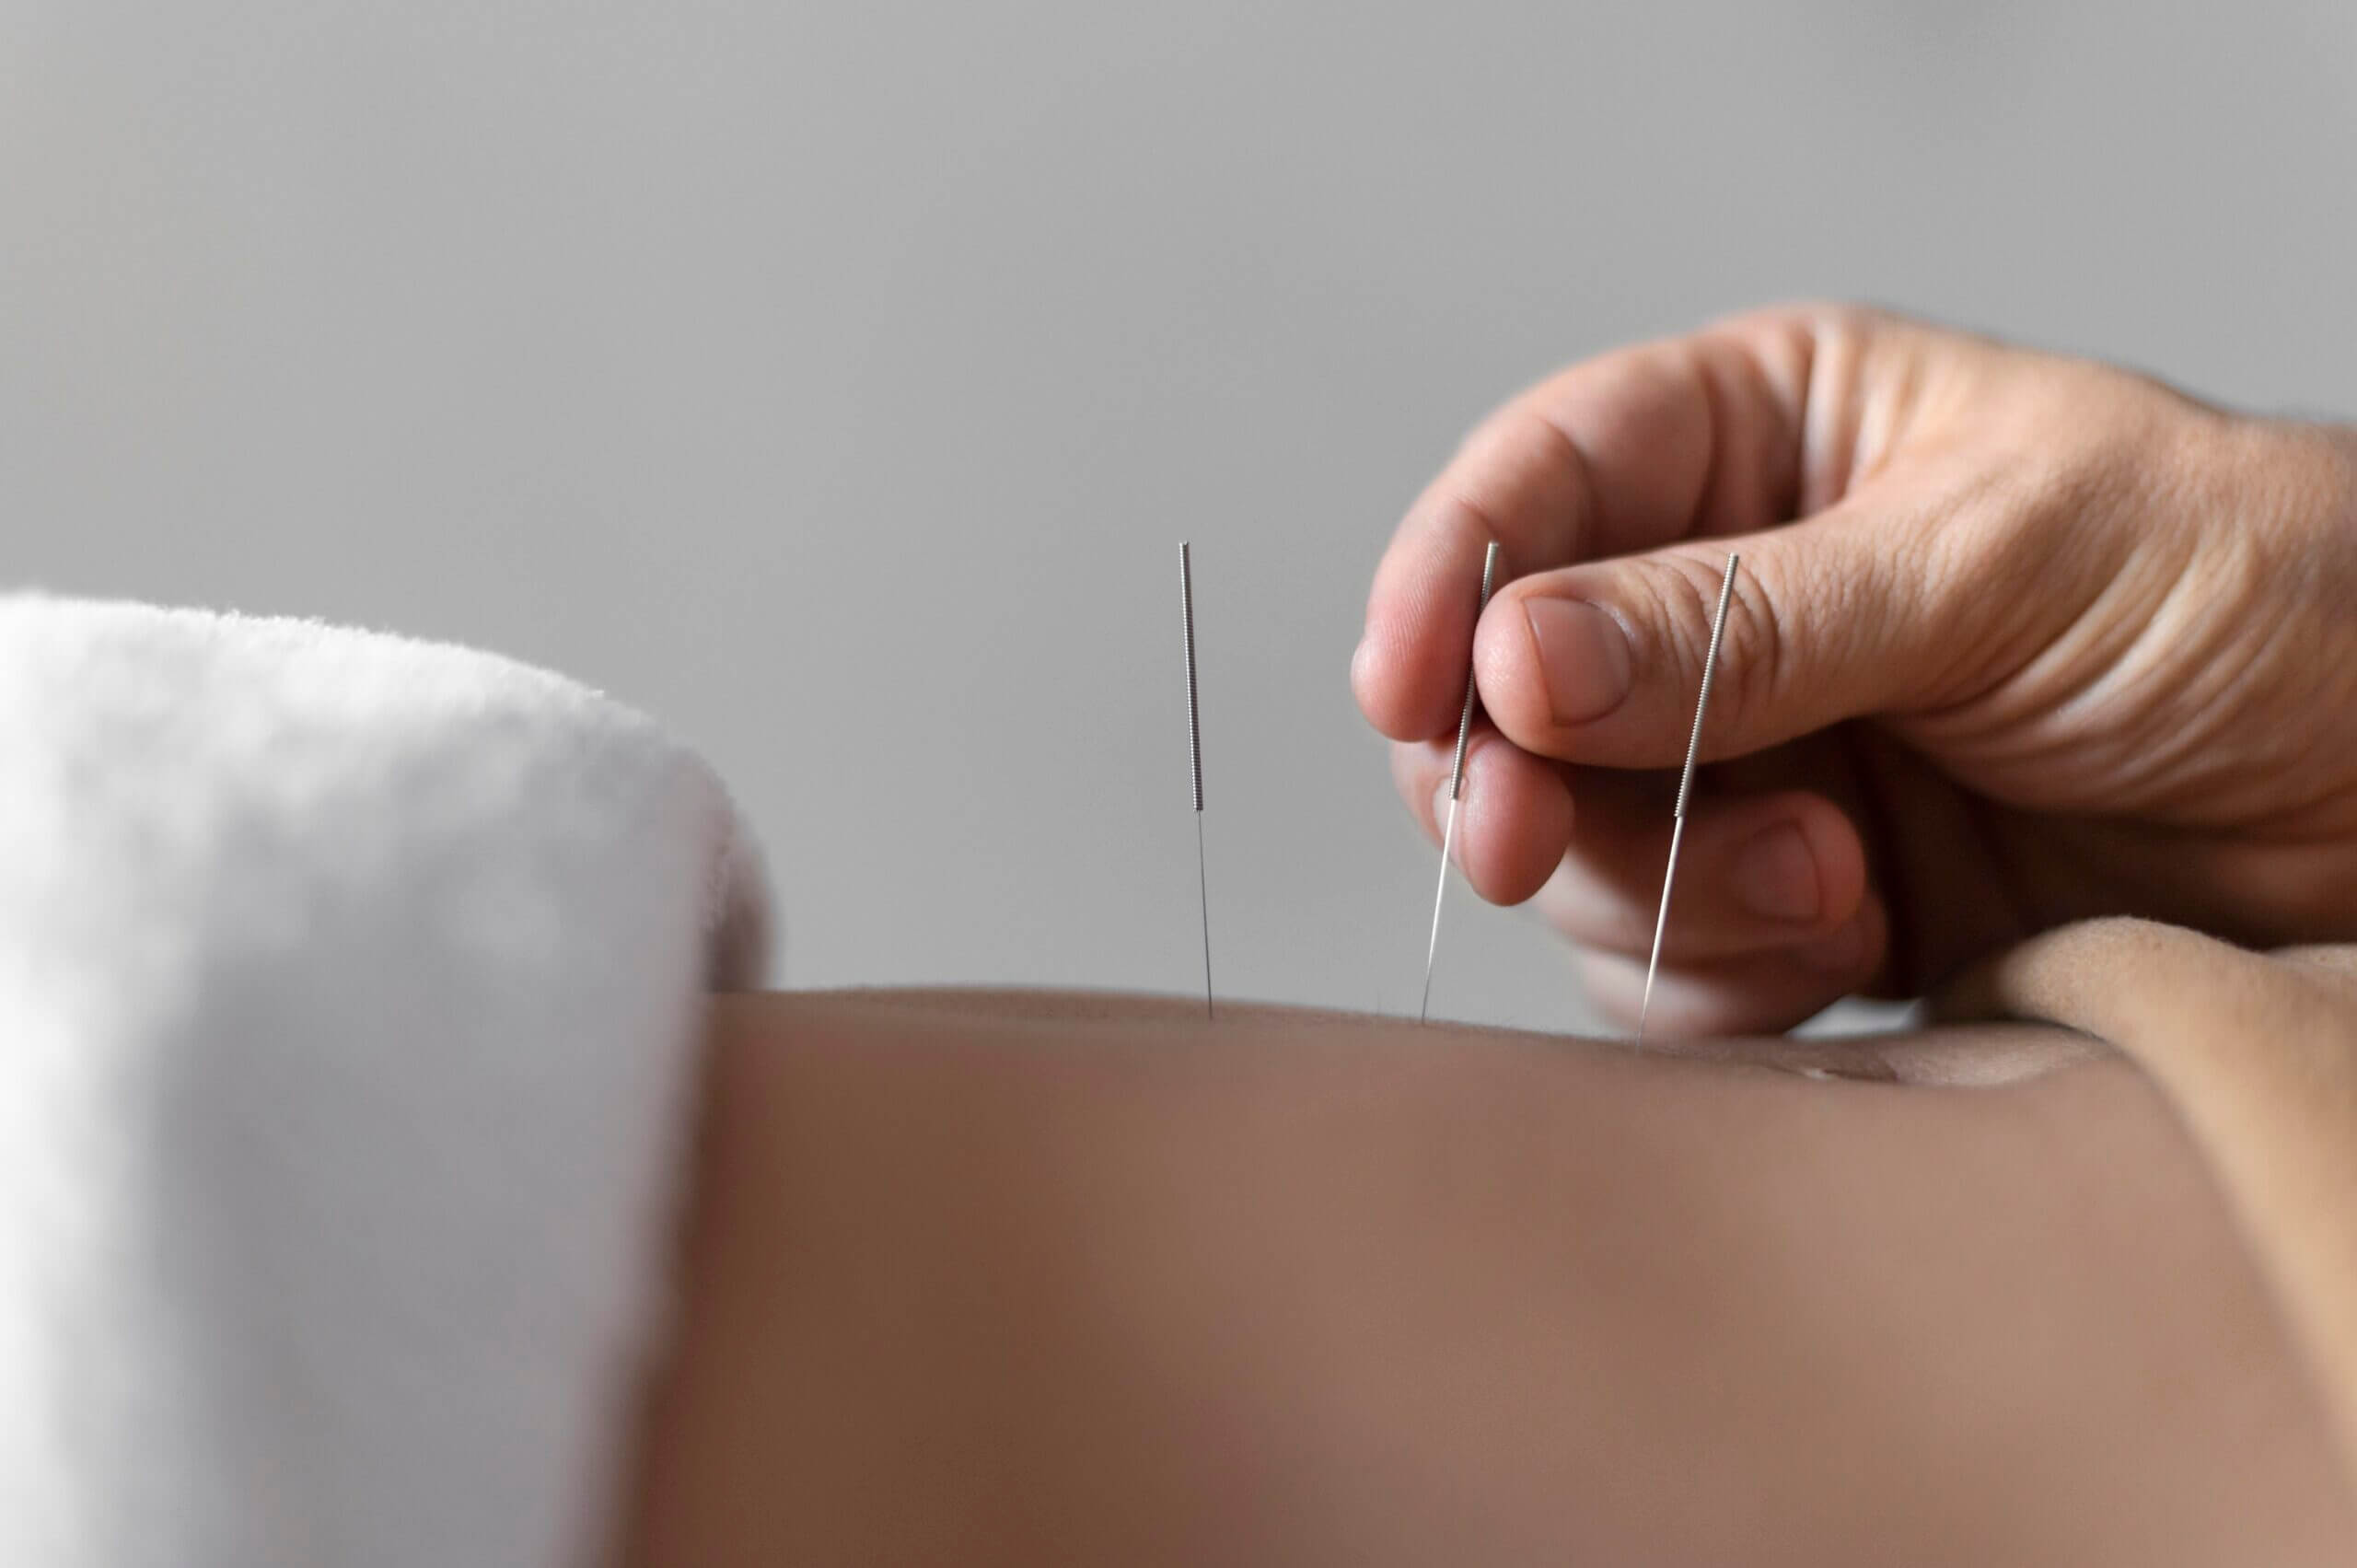 Dry needling being applied in skin